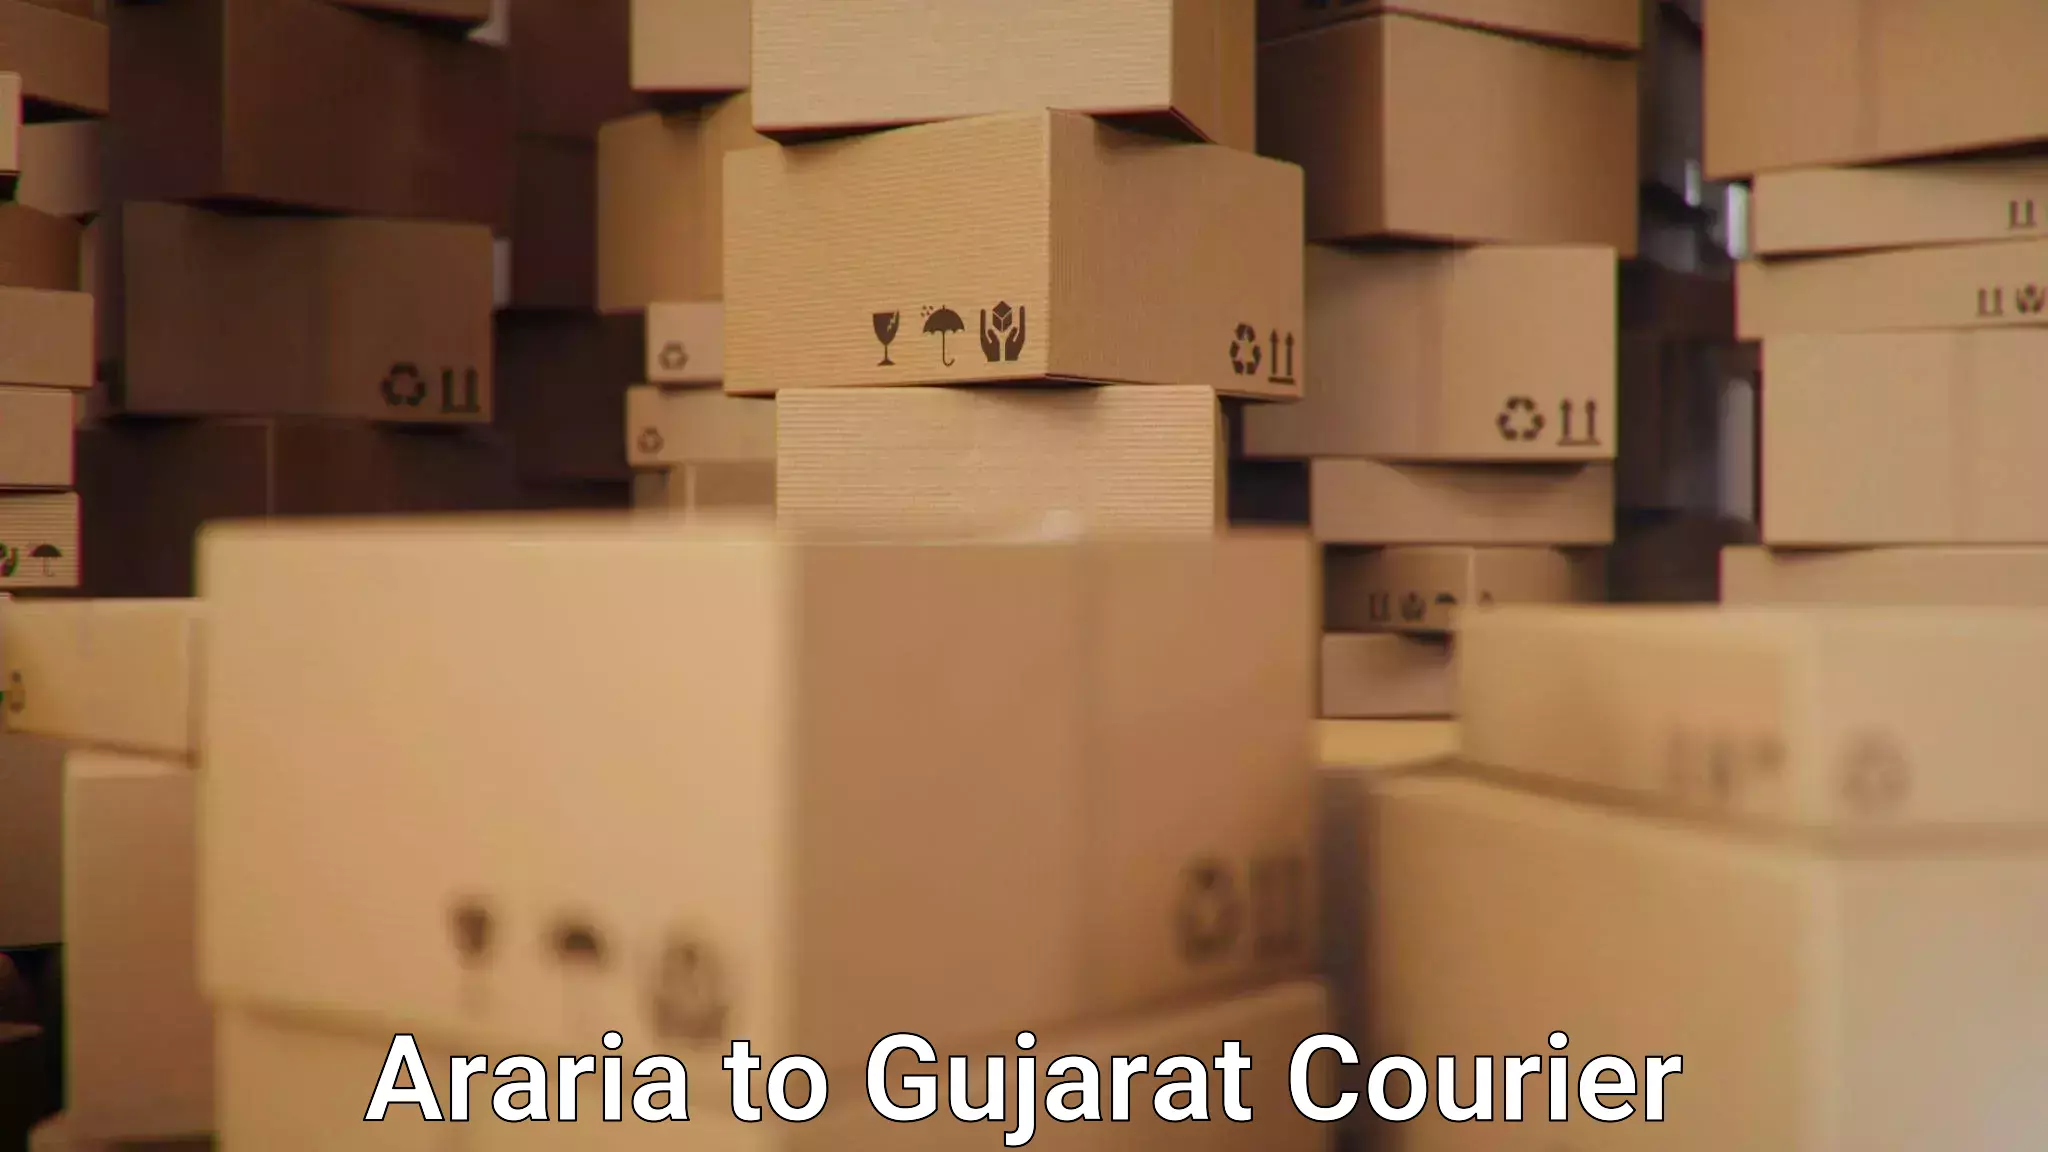 Courier service partnerships Araria to Porbandar